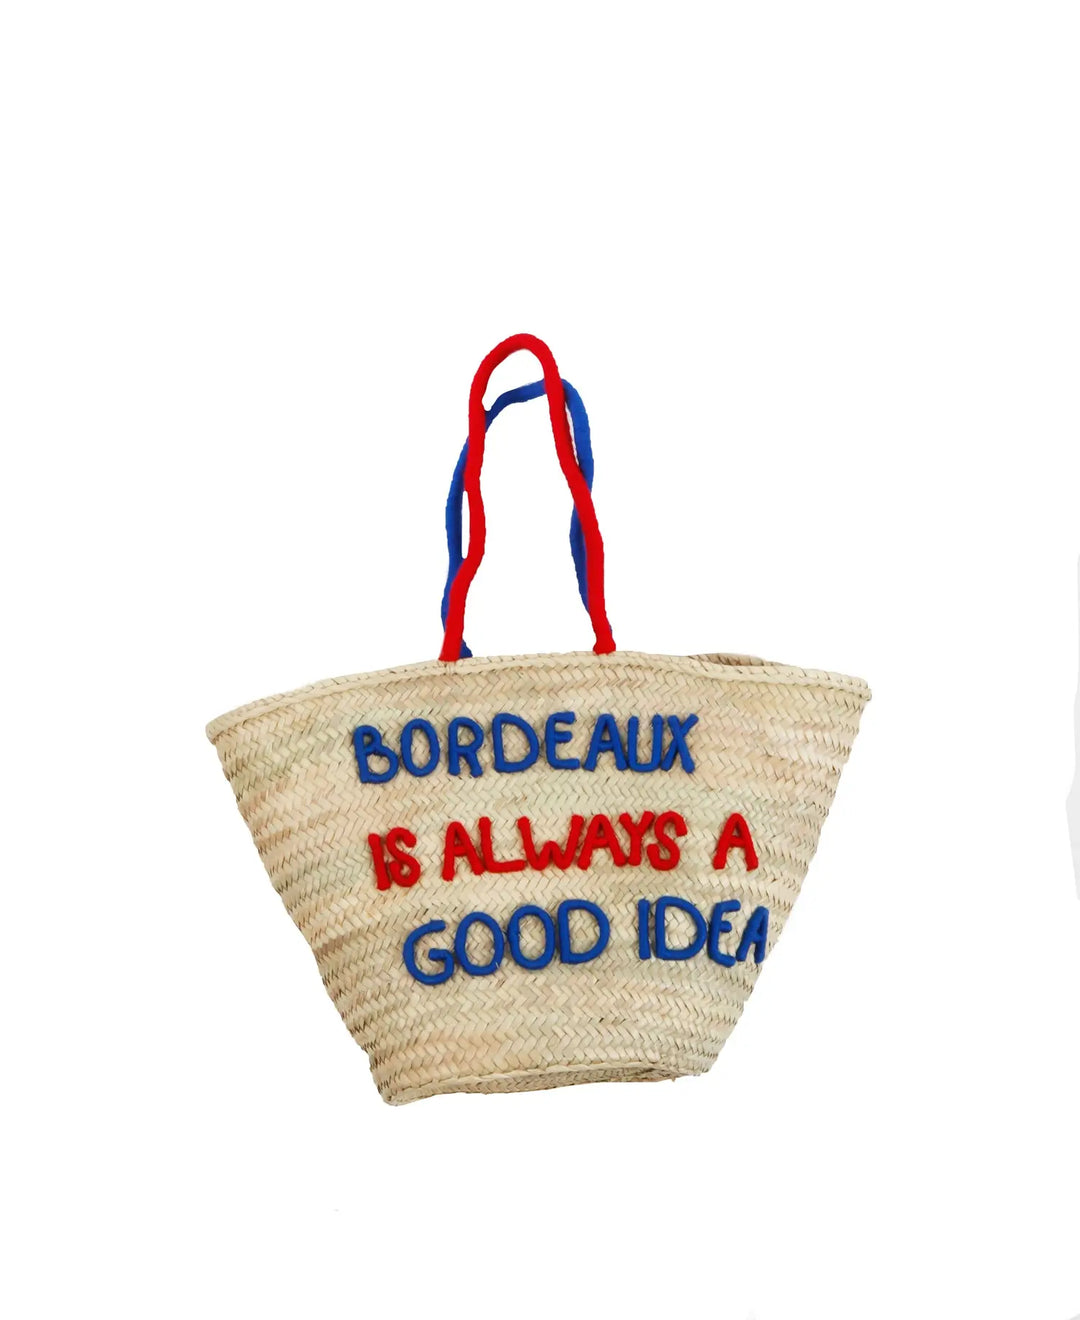 Bordeaux Is Always A Good Idea GPS Basket